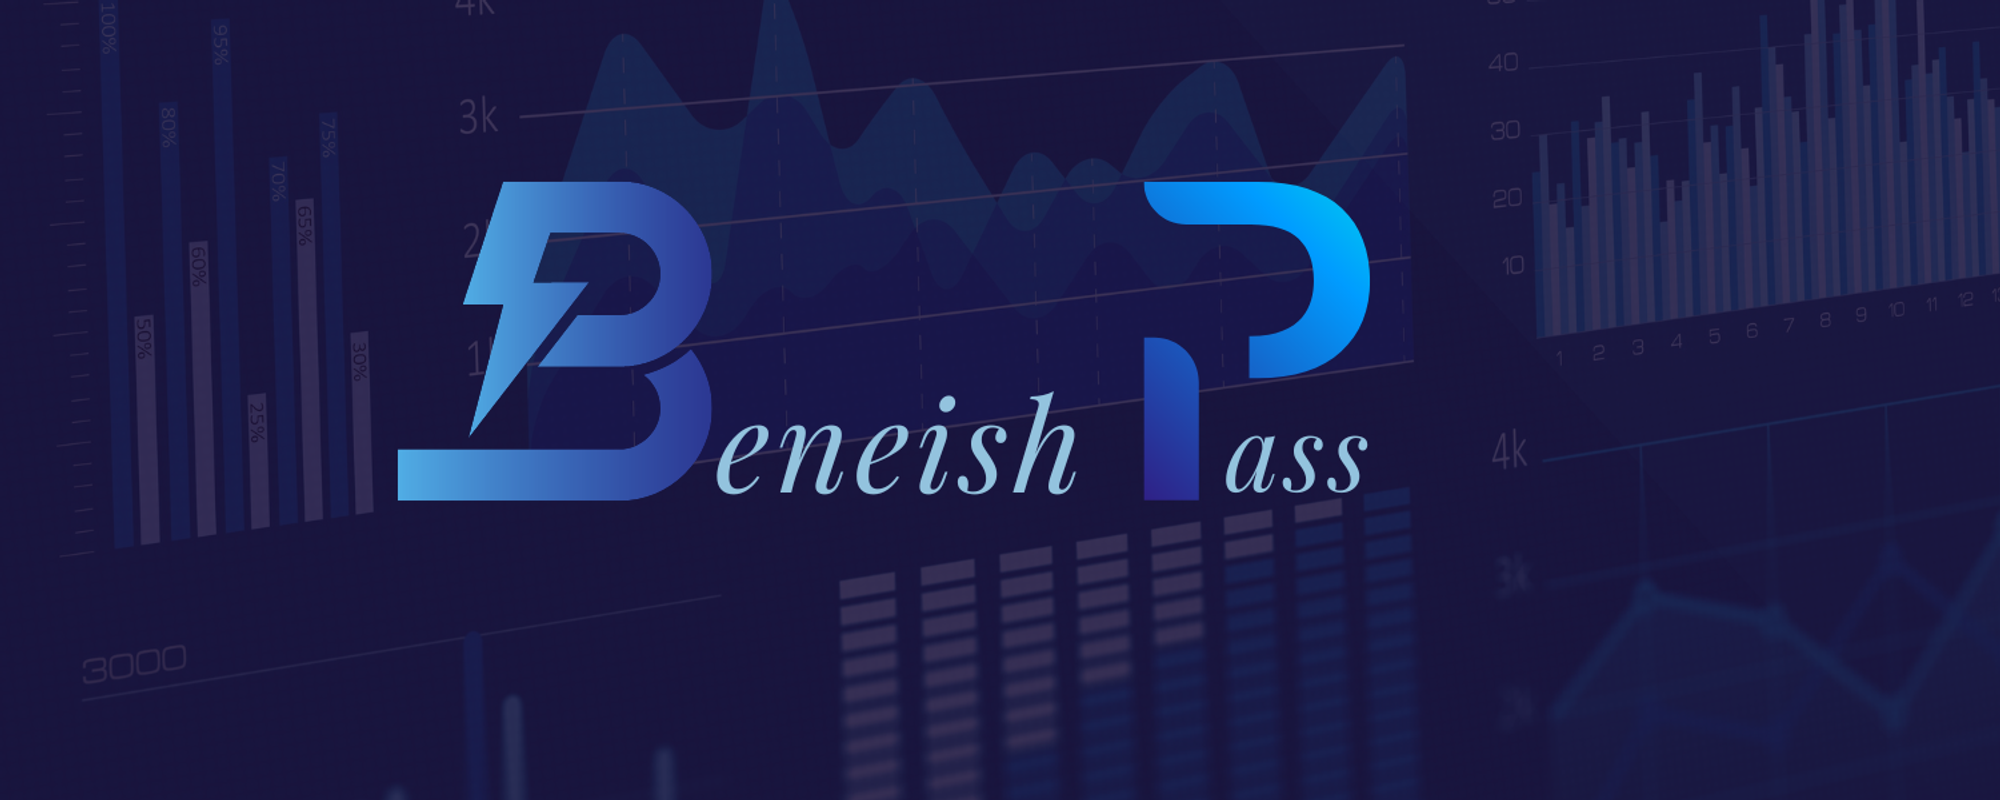 Beneish Pass - Analyzing Quality of Financial Statements 